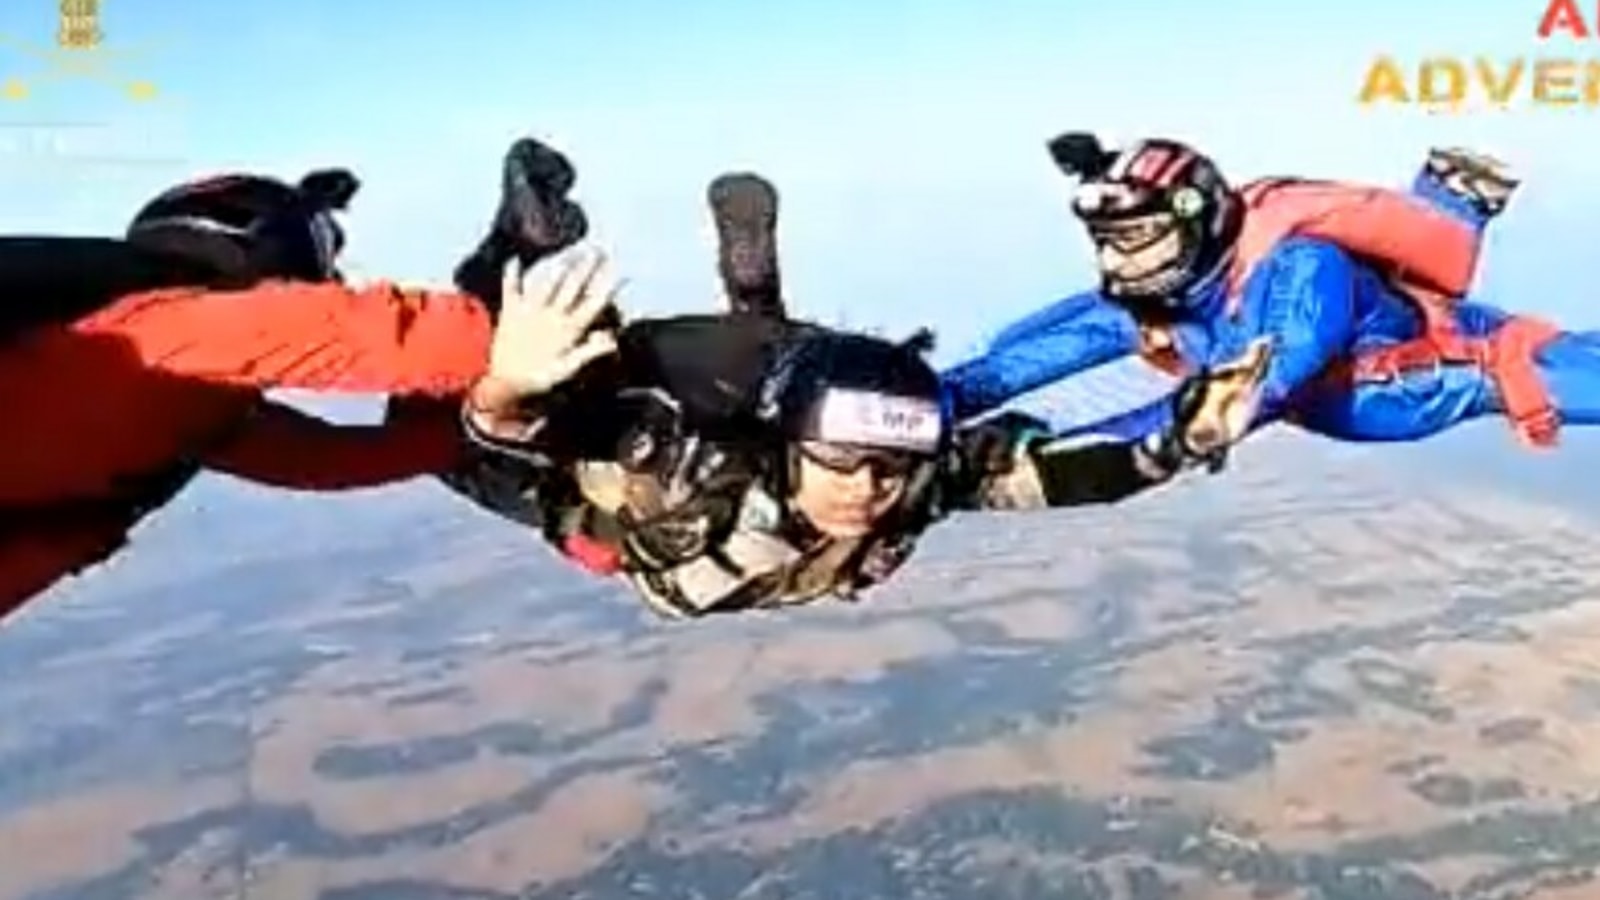 Alpha 5 project announces world-record skydive | wtsp.com